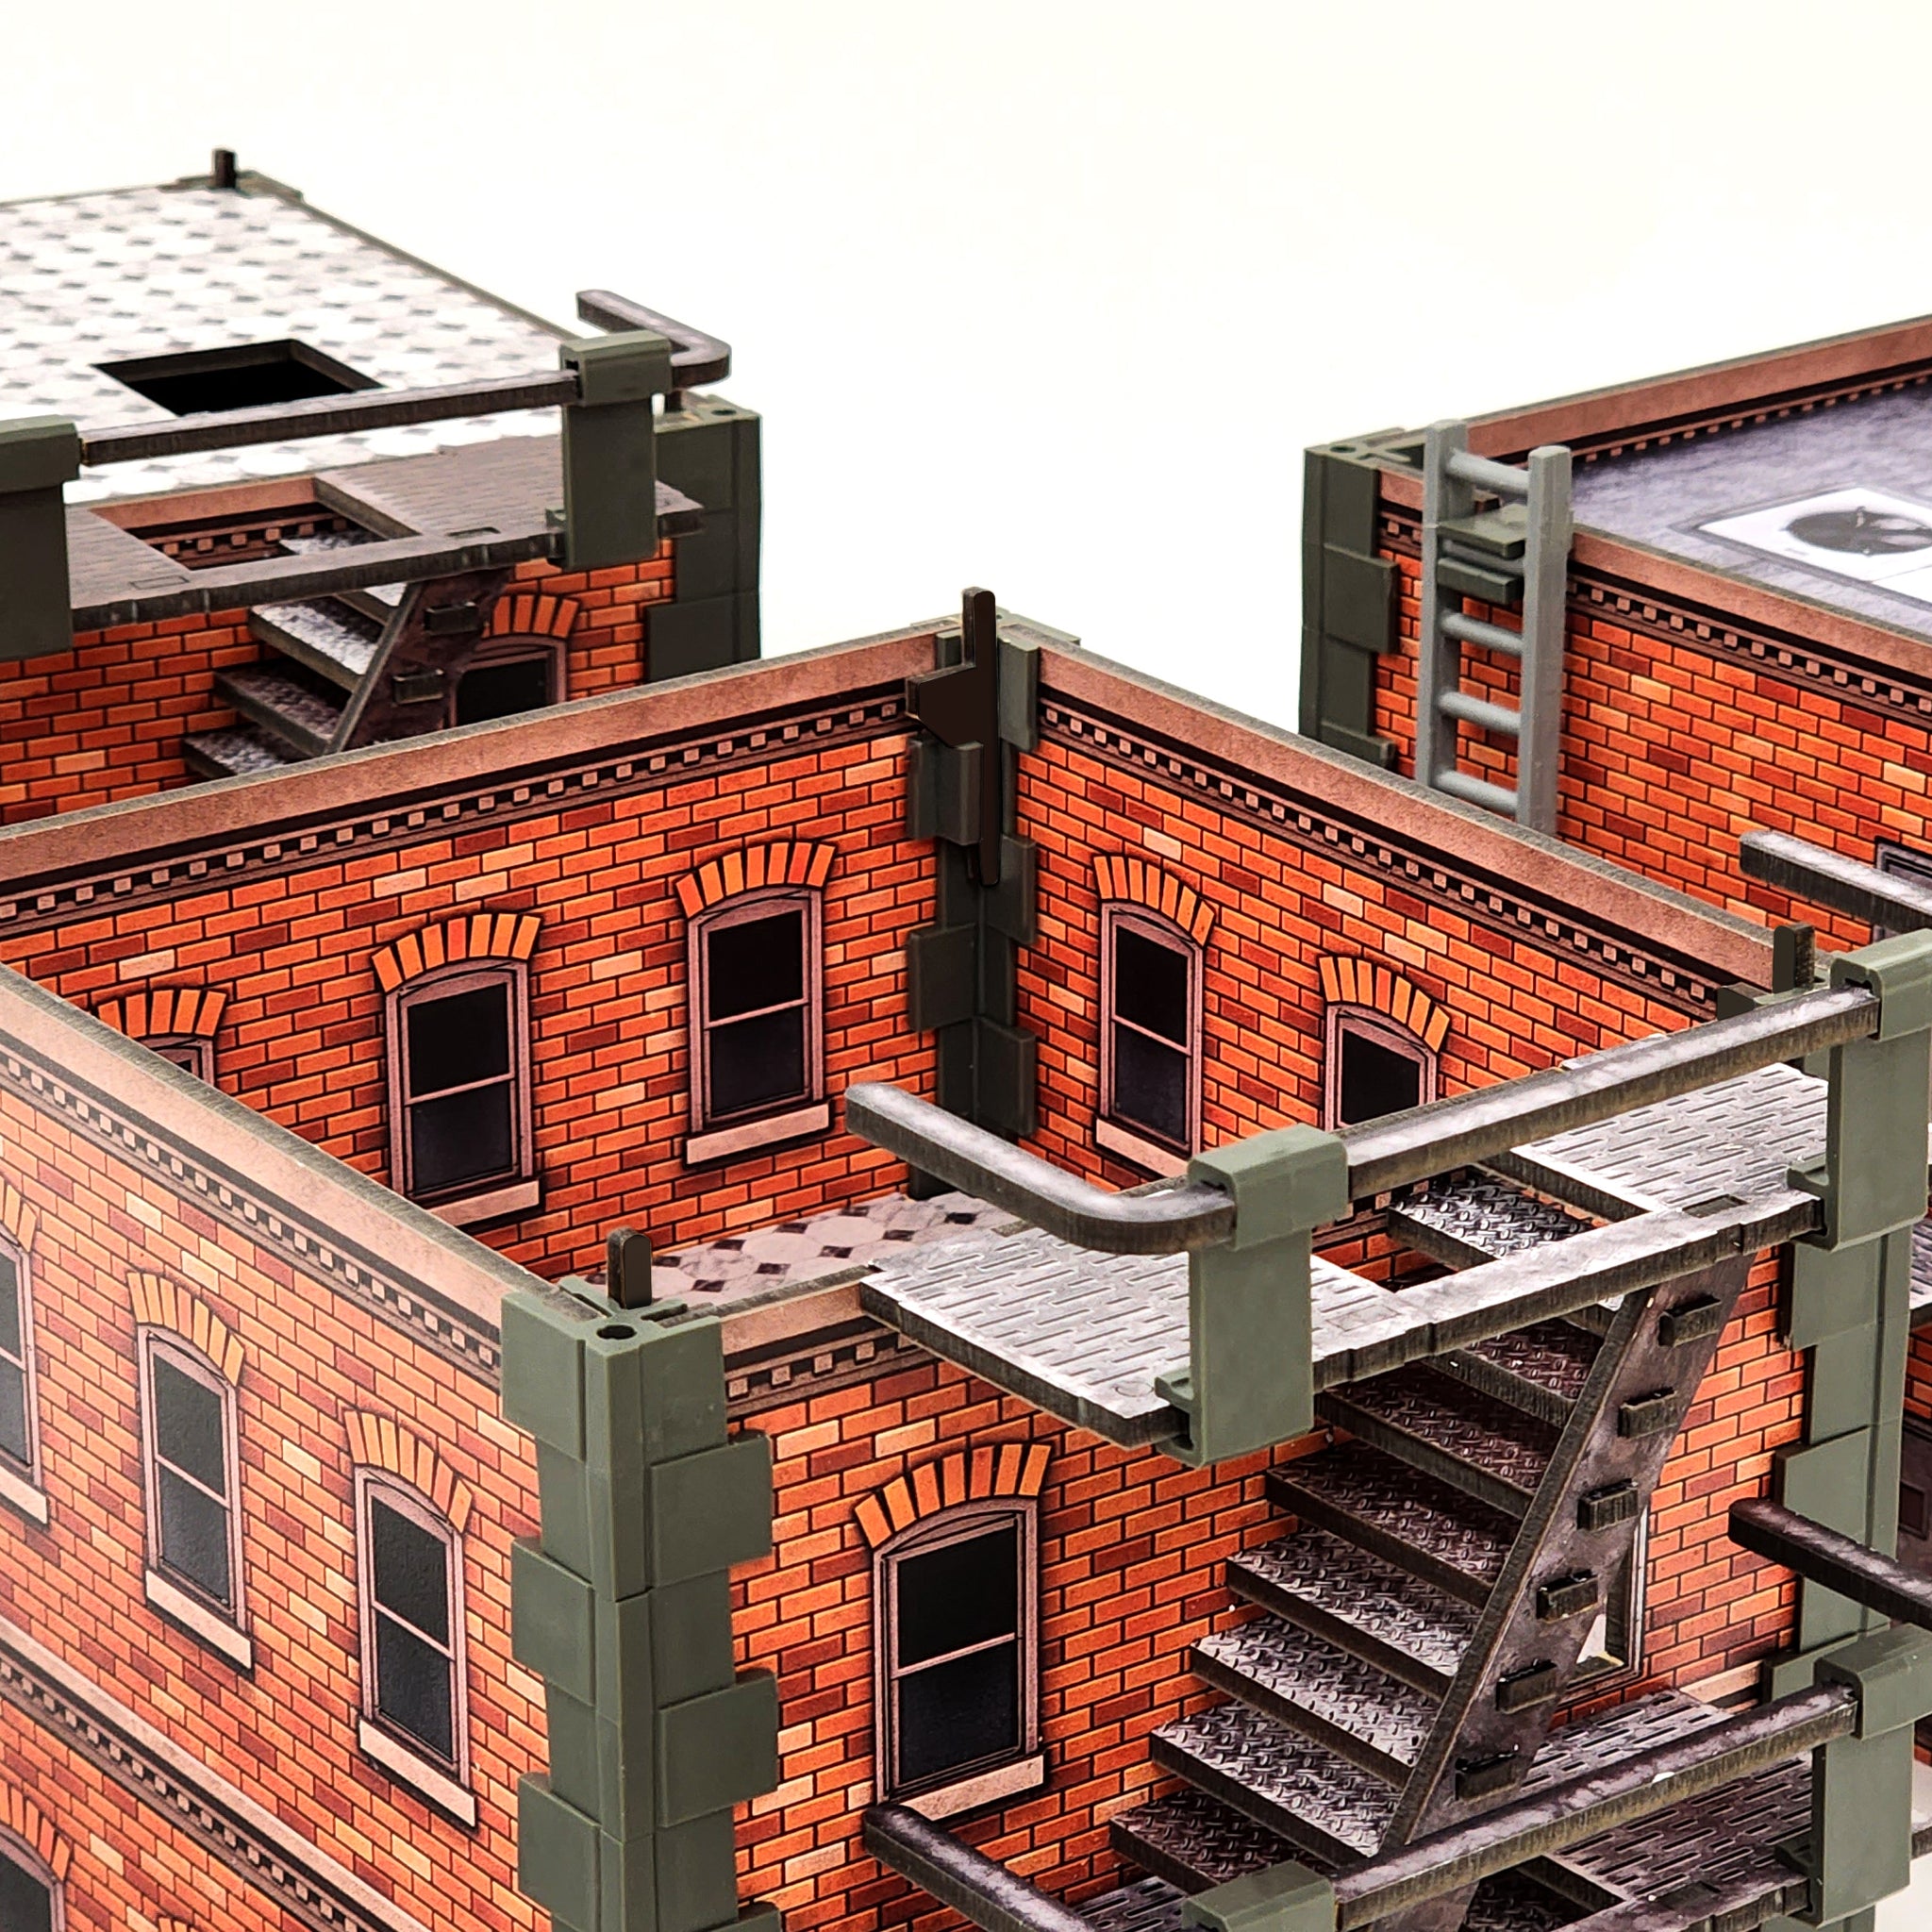 Metropolis Cityscape: Six-Story Brick High Rise